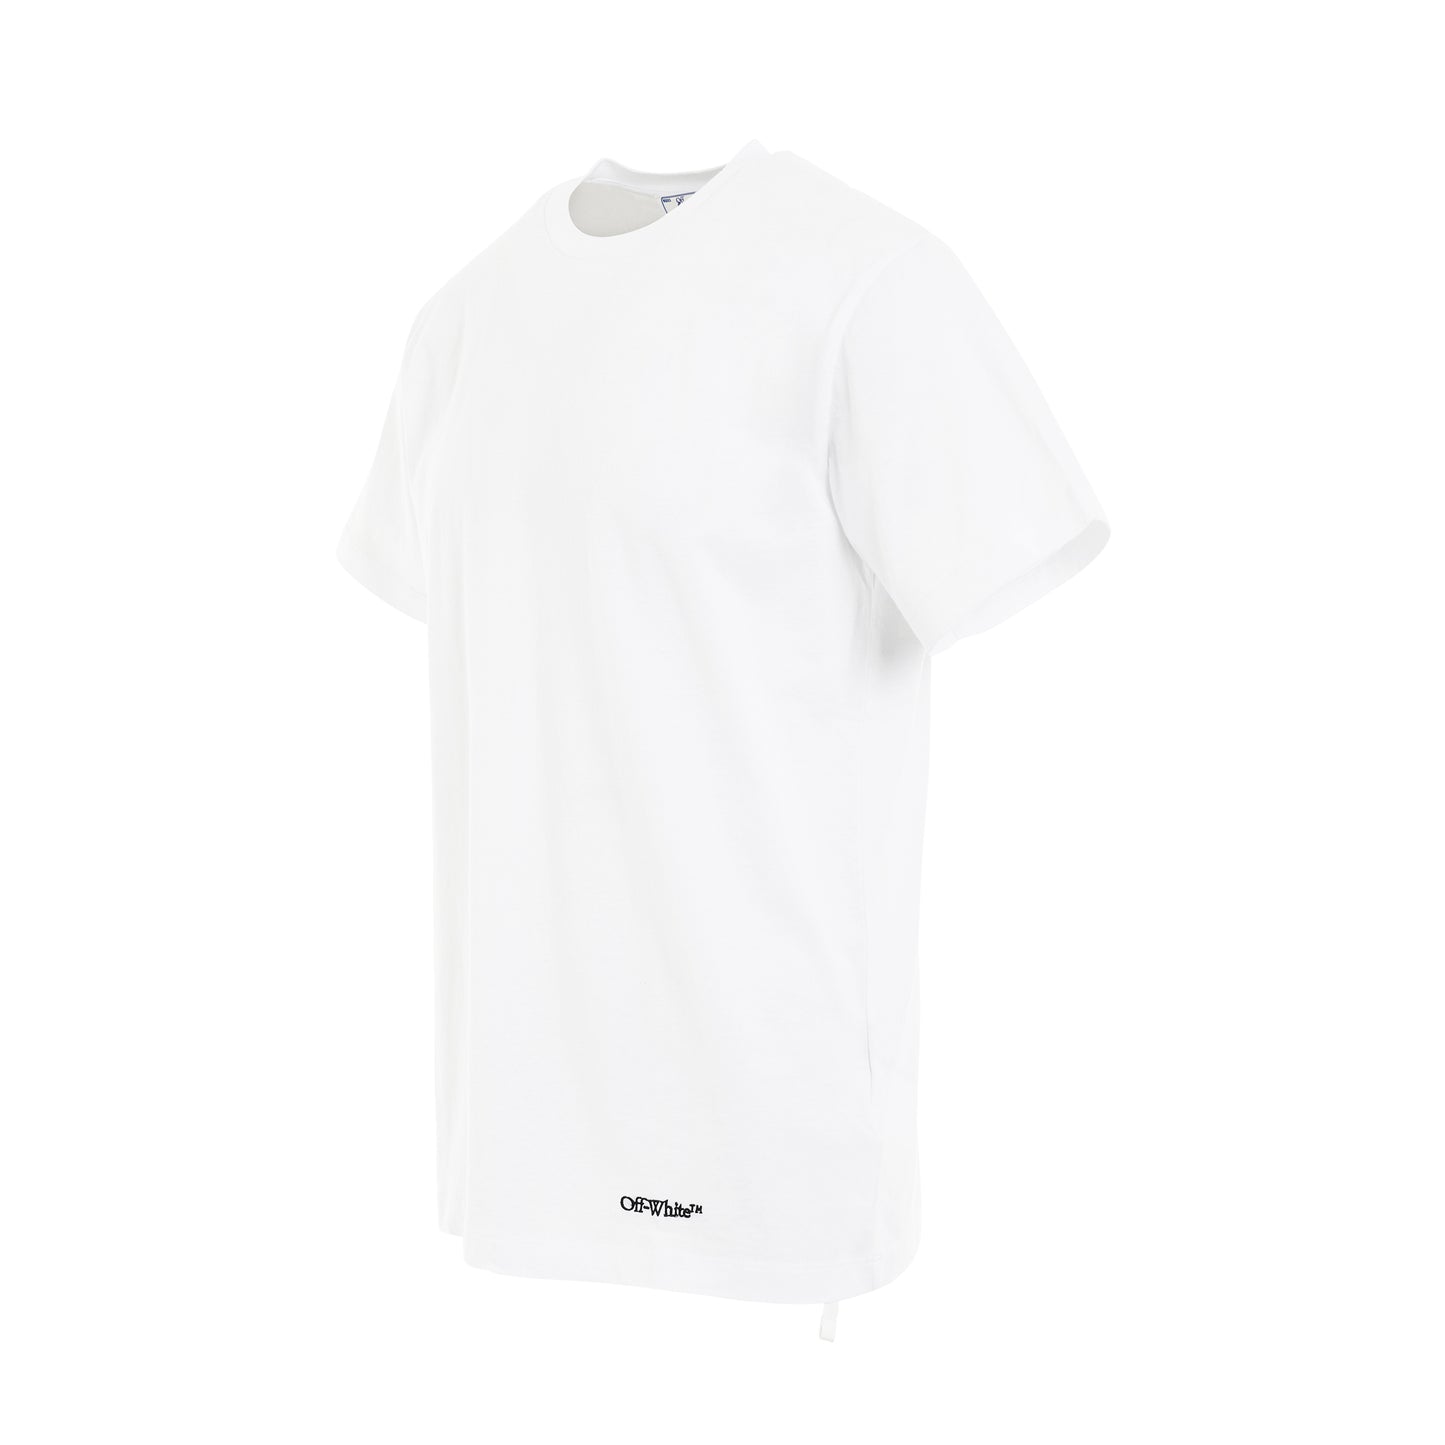 Scribble Diagonal Slim Short Sleeve T-Shirt in White/Black